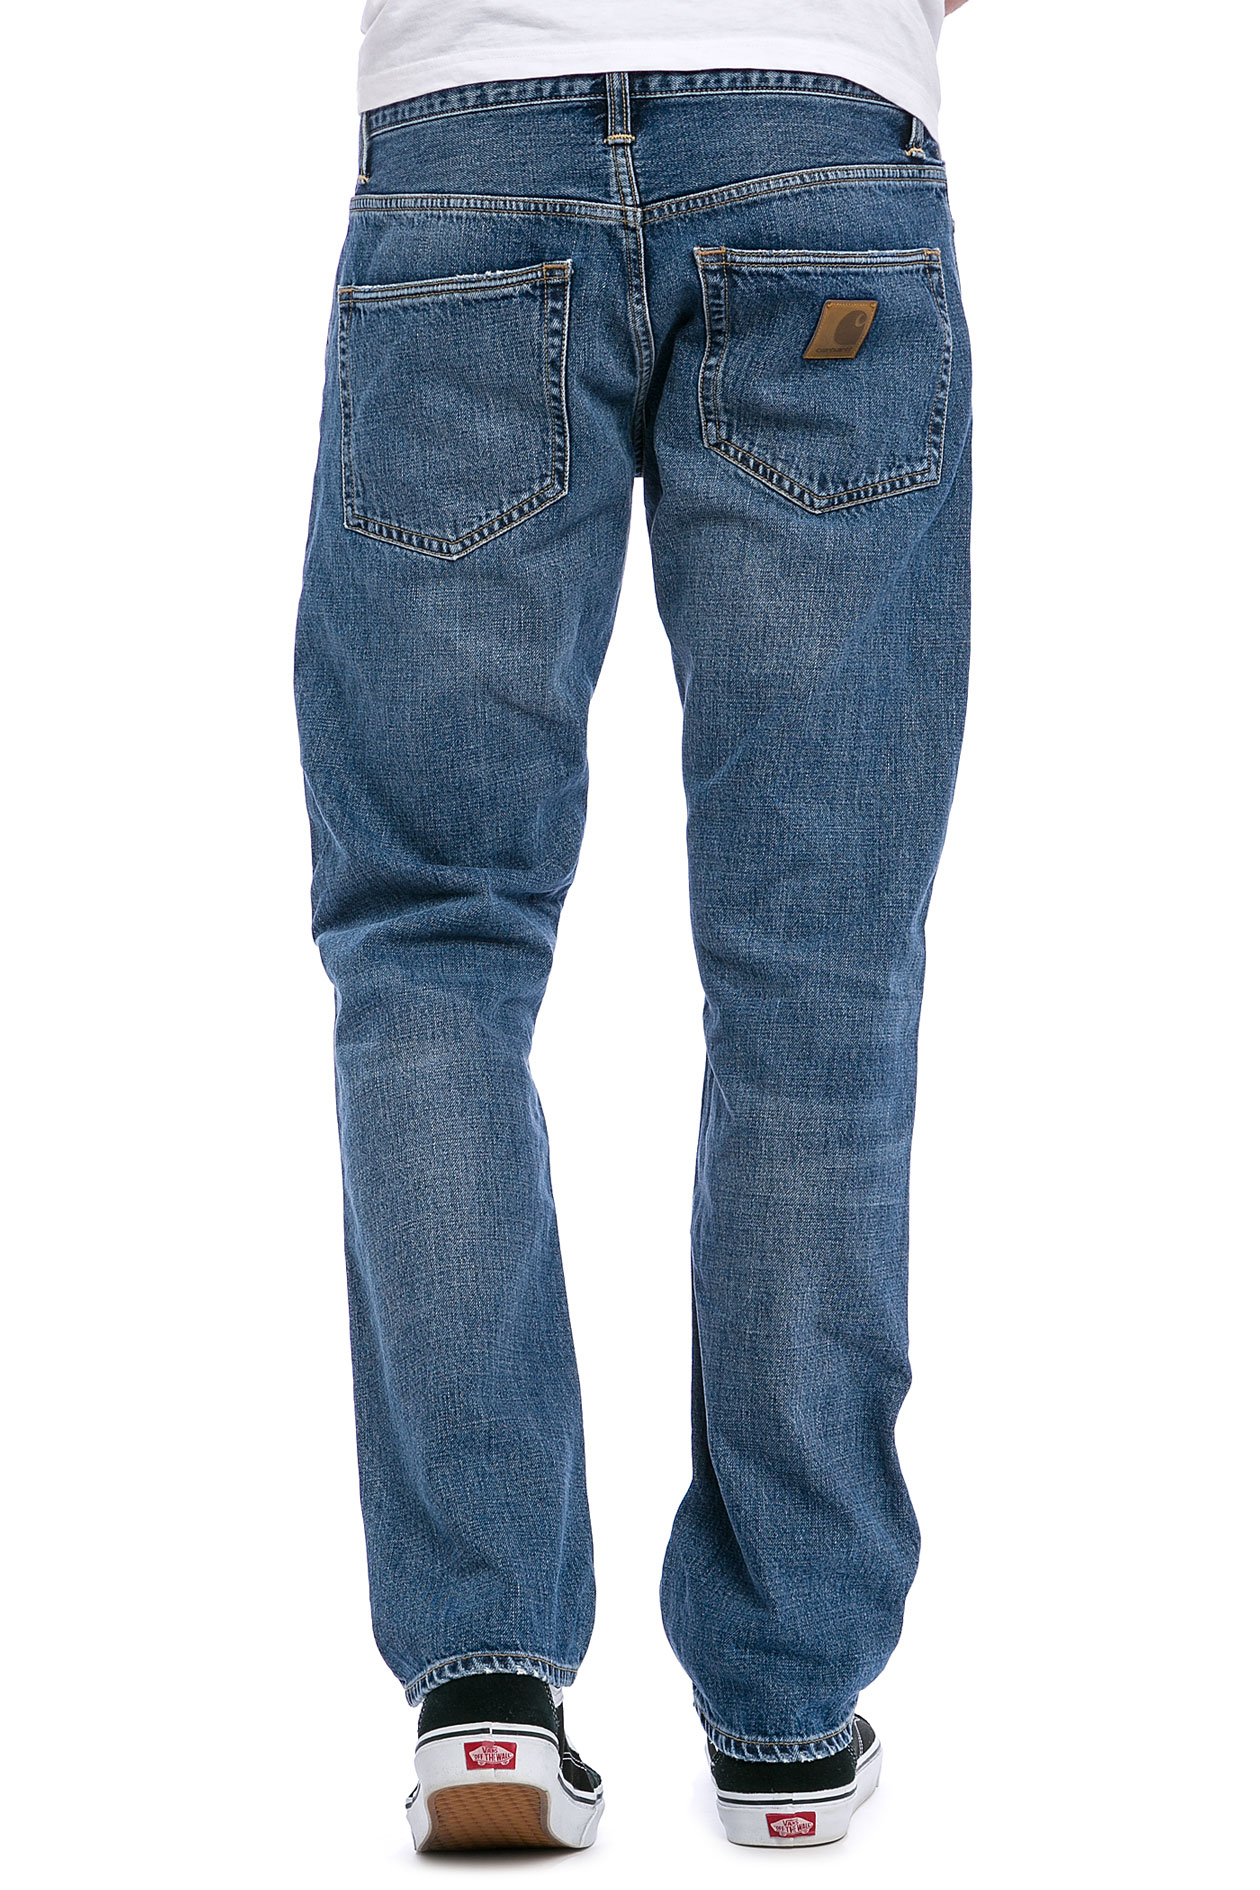 Carhartt WIP Oakland Pant Edgewood Jeans (blue true stone) buy at ...